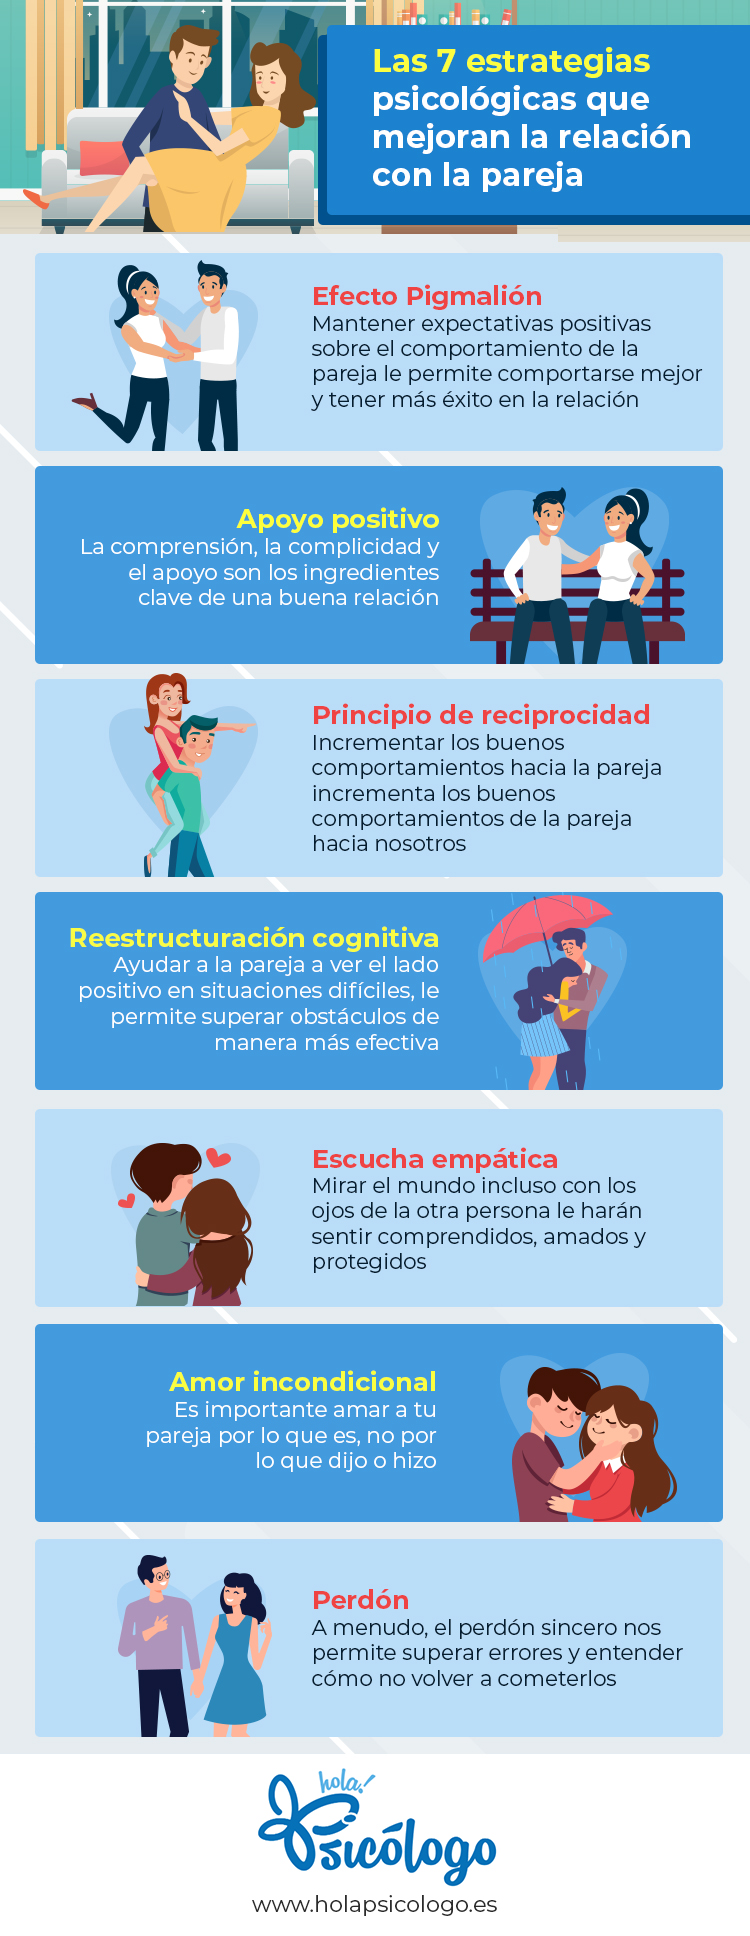 Las 7 estrategias psicologicas que mejoran la relacion con la pareja - INFOGRAFIA HolaPsicologo